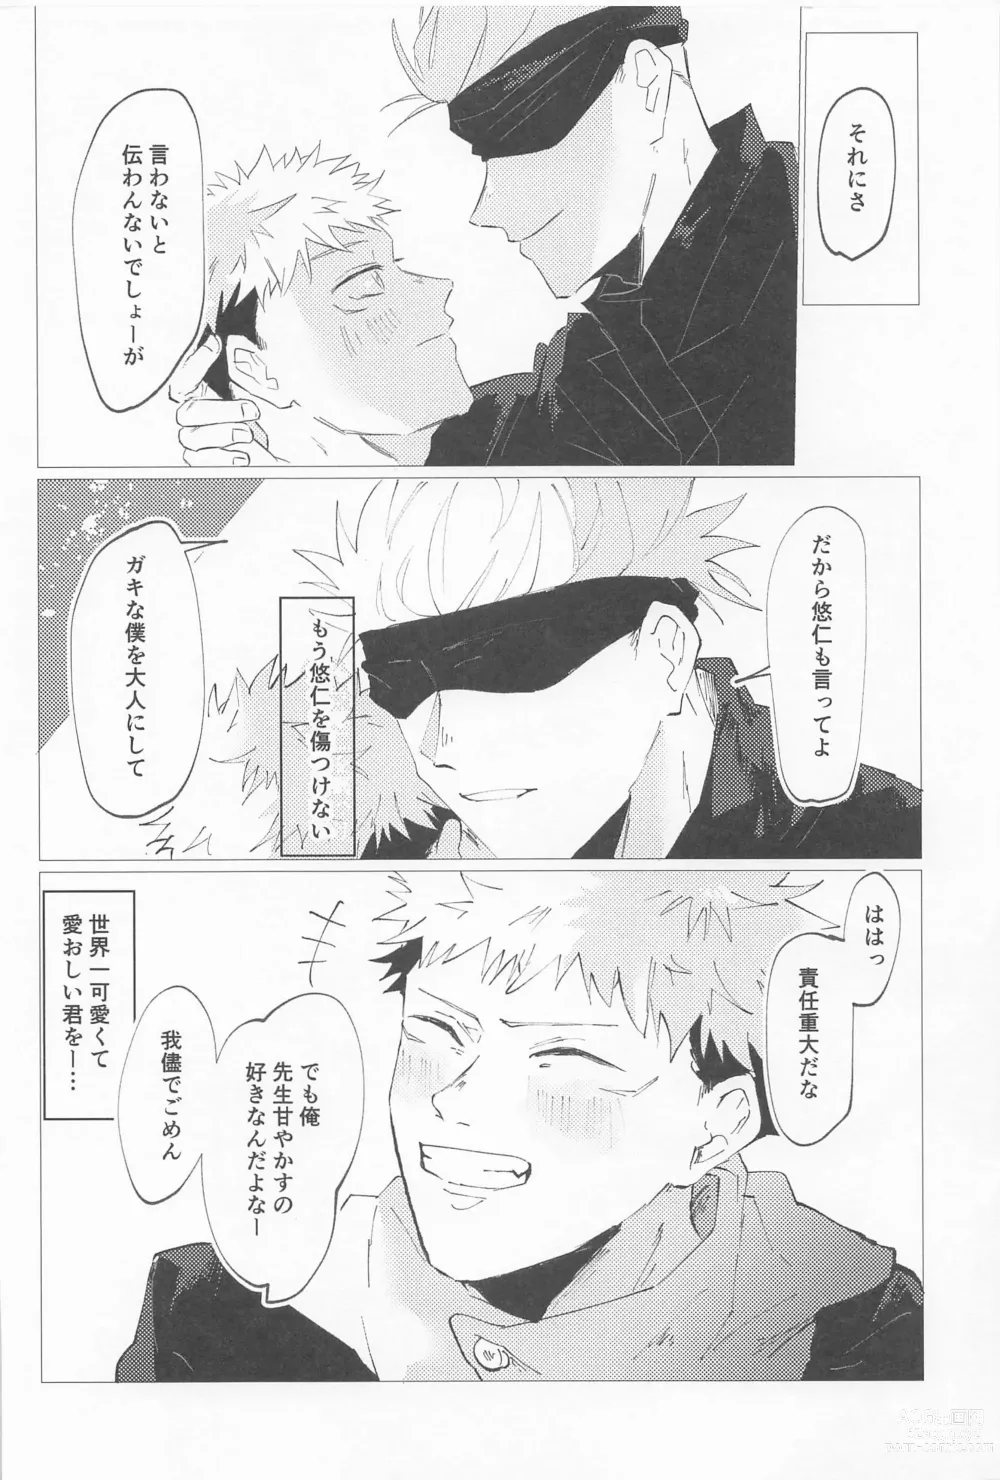 Page 43 of doujinshi Sekaiichi Kawaii Kimi e - to you the cutest person in the world